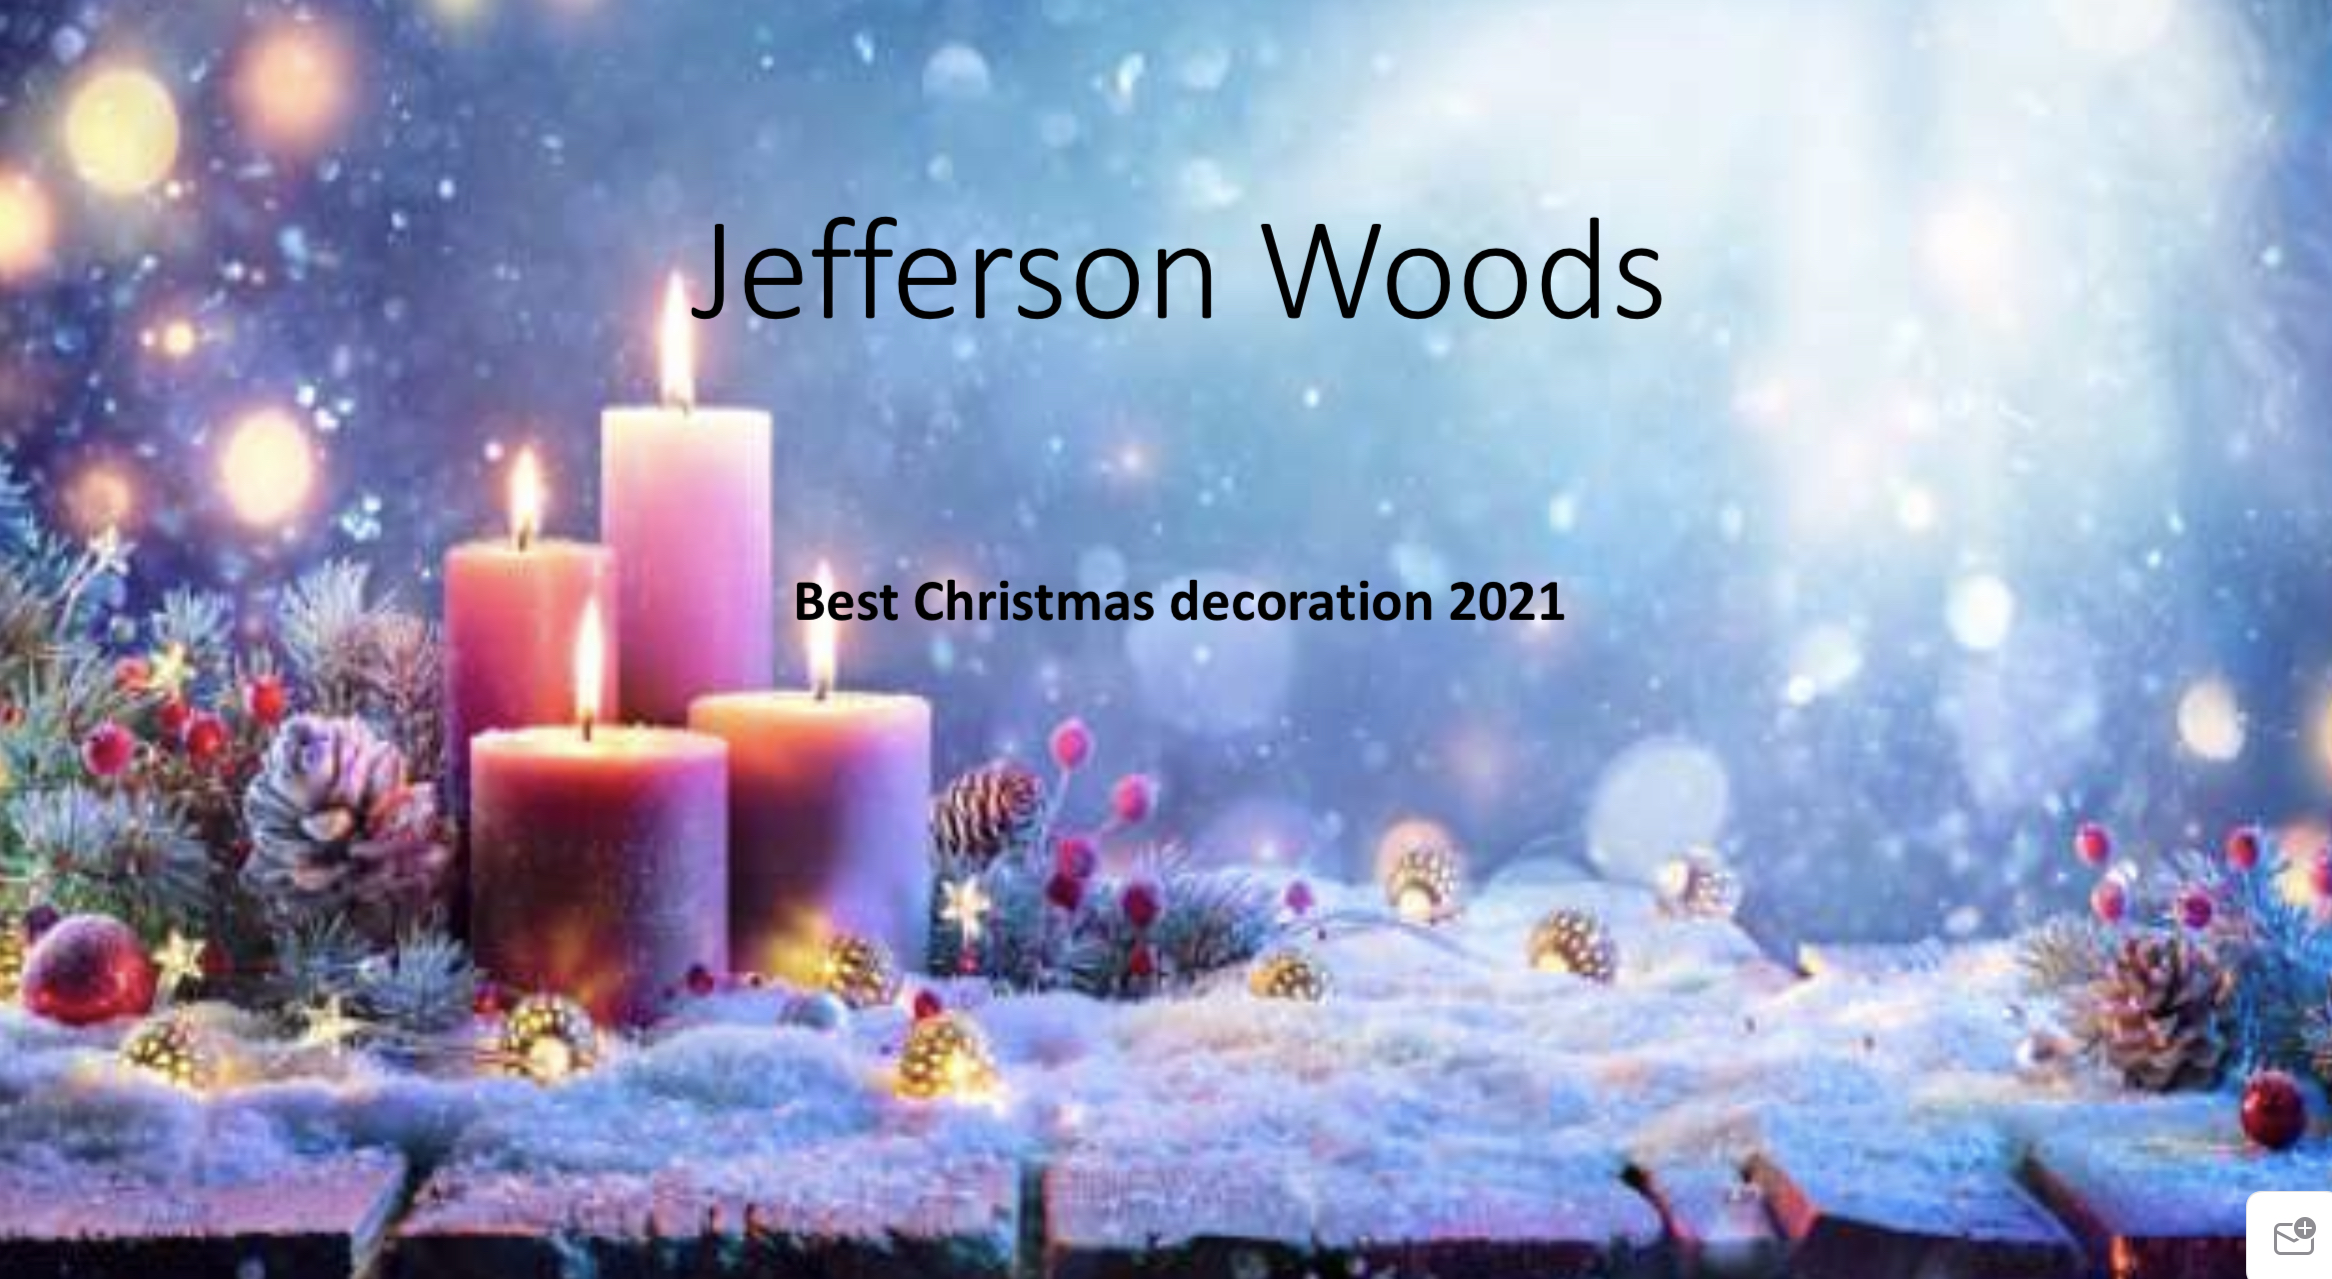 Holiday Decorations Winner 2021